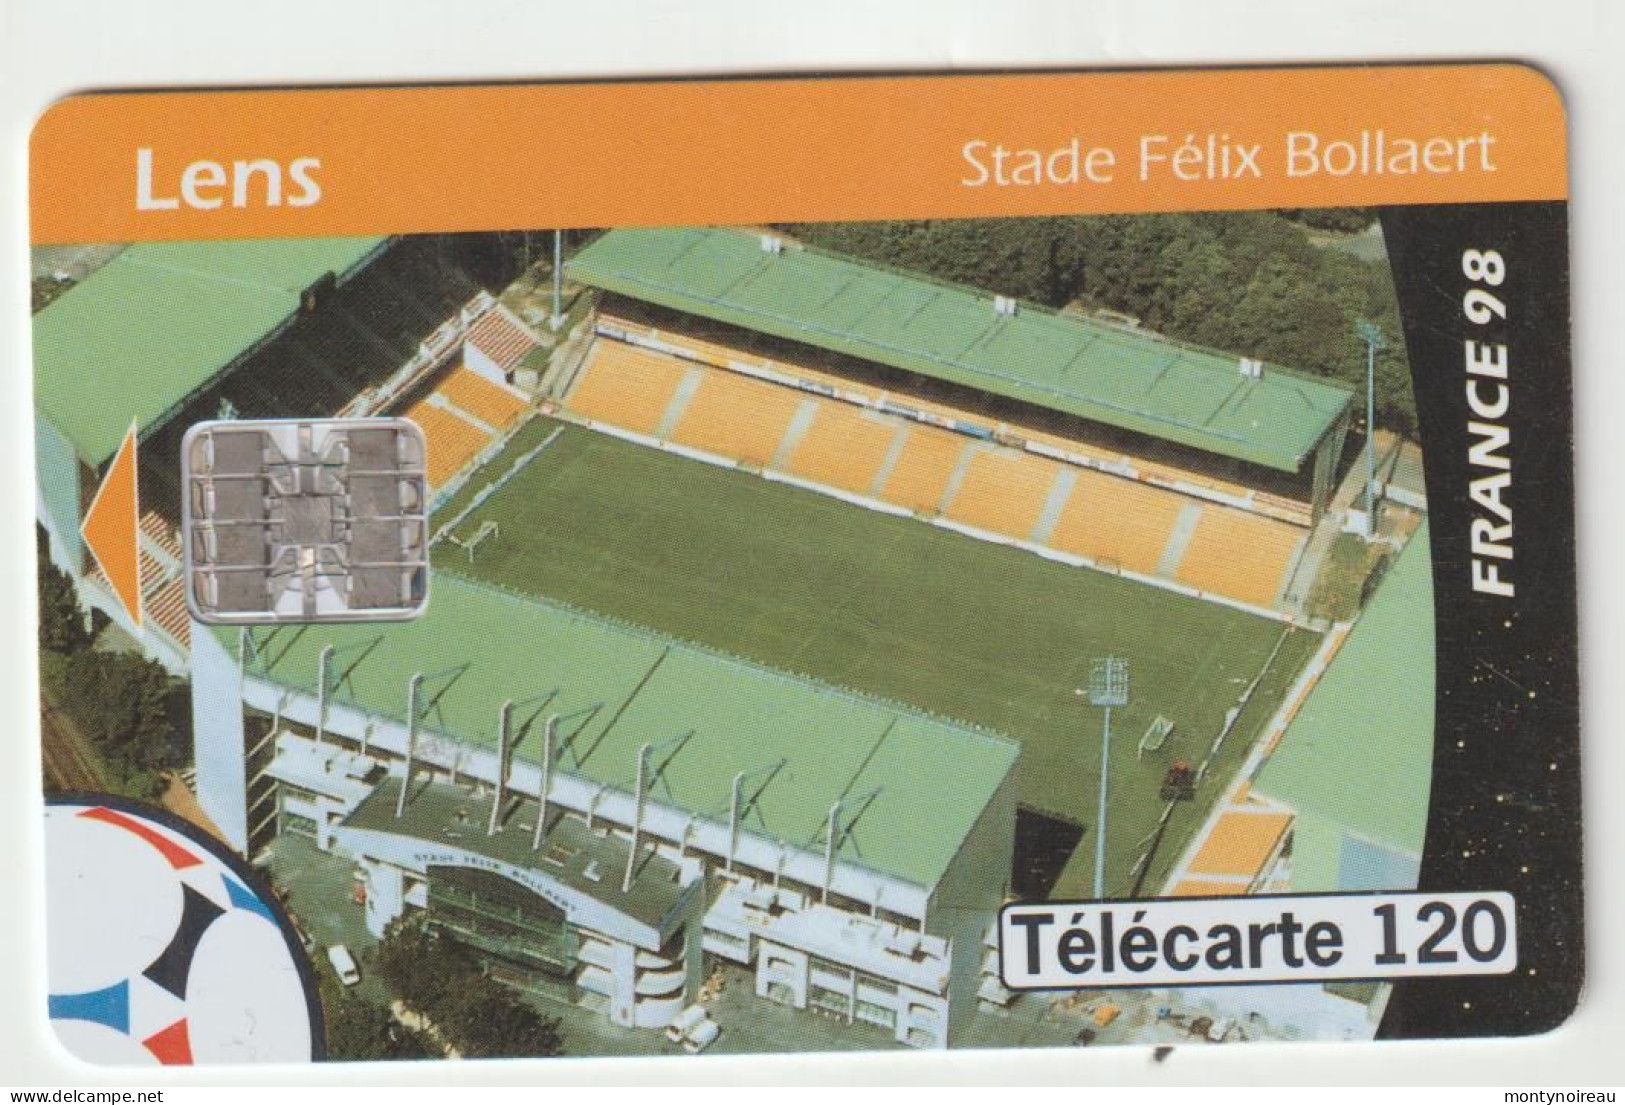 Télécarte France LENS Stade Bollaert - 1998 coupe du monde - F 874 - RCL